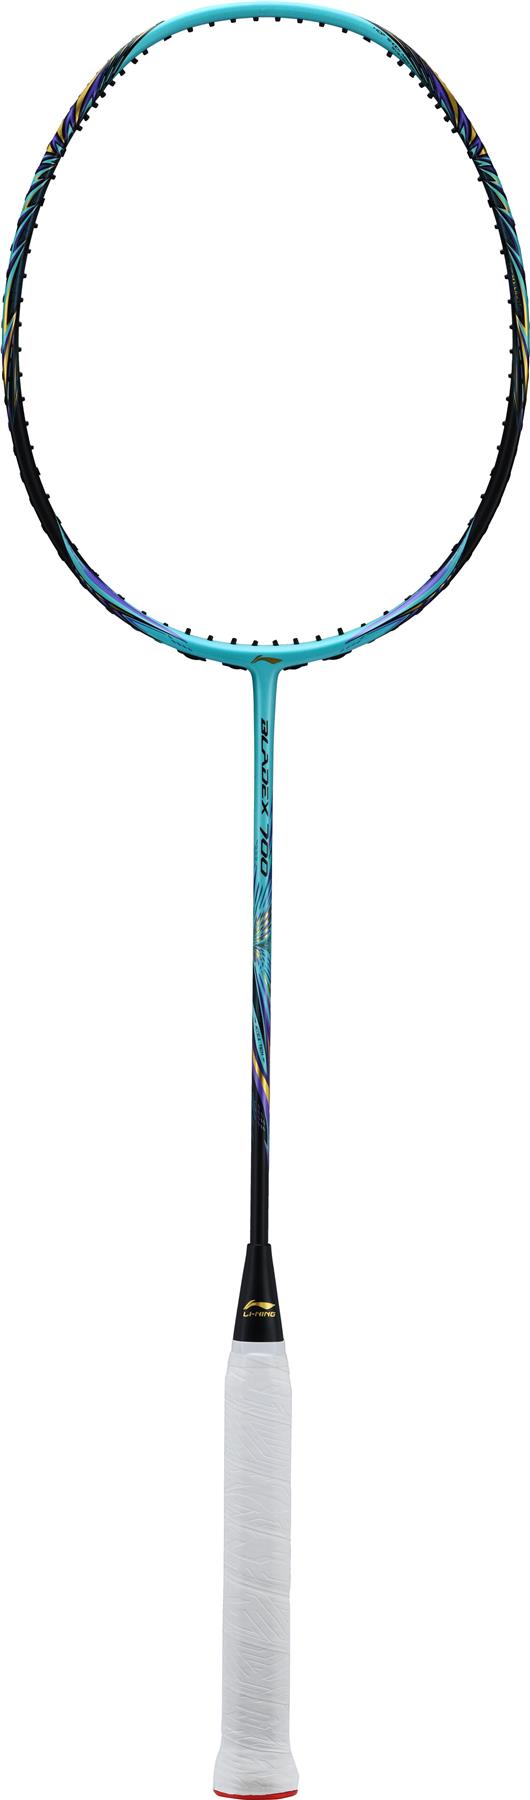 Li-Ning BladeX 700 Badminton Racket - Turquoise - Full